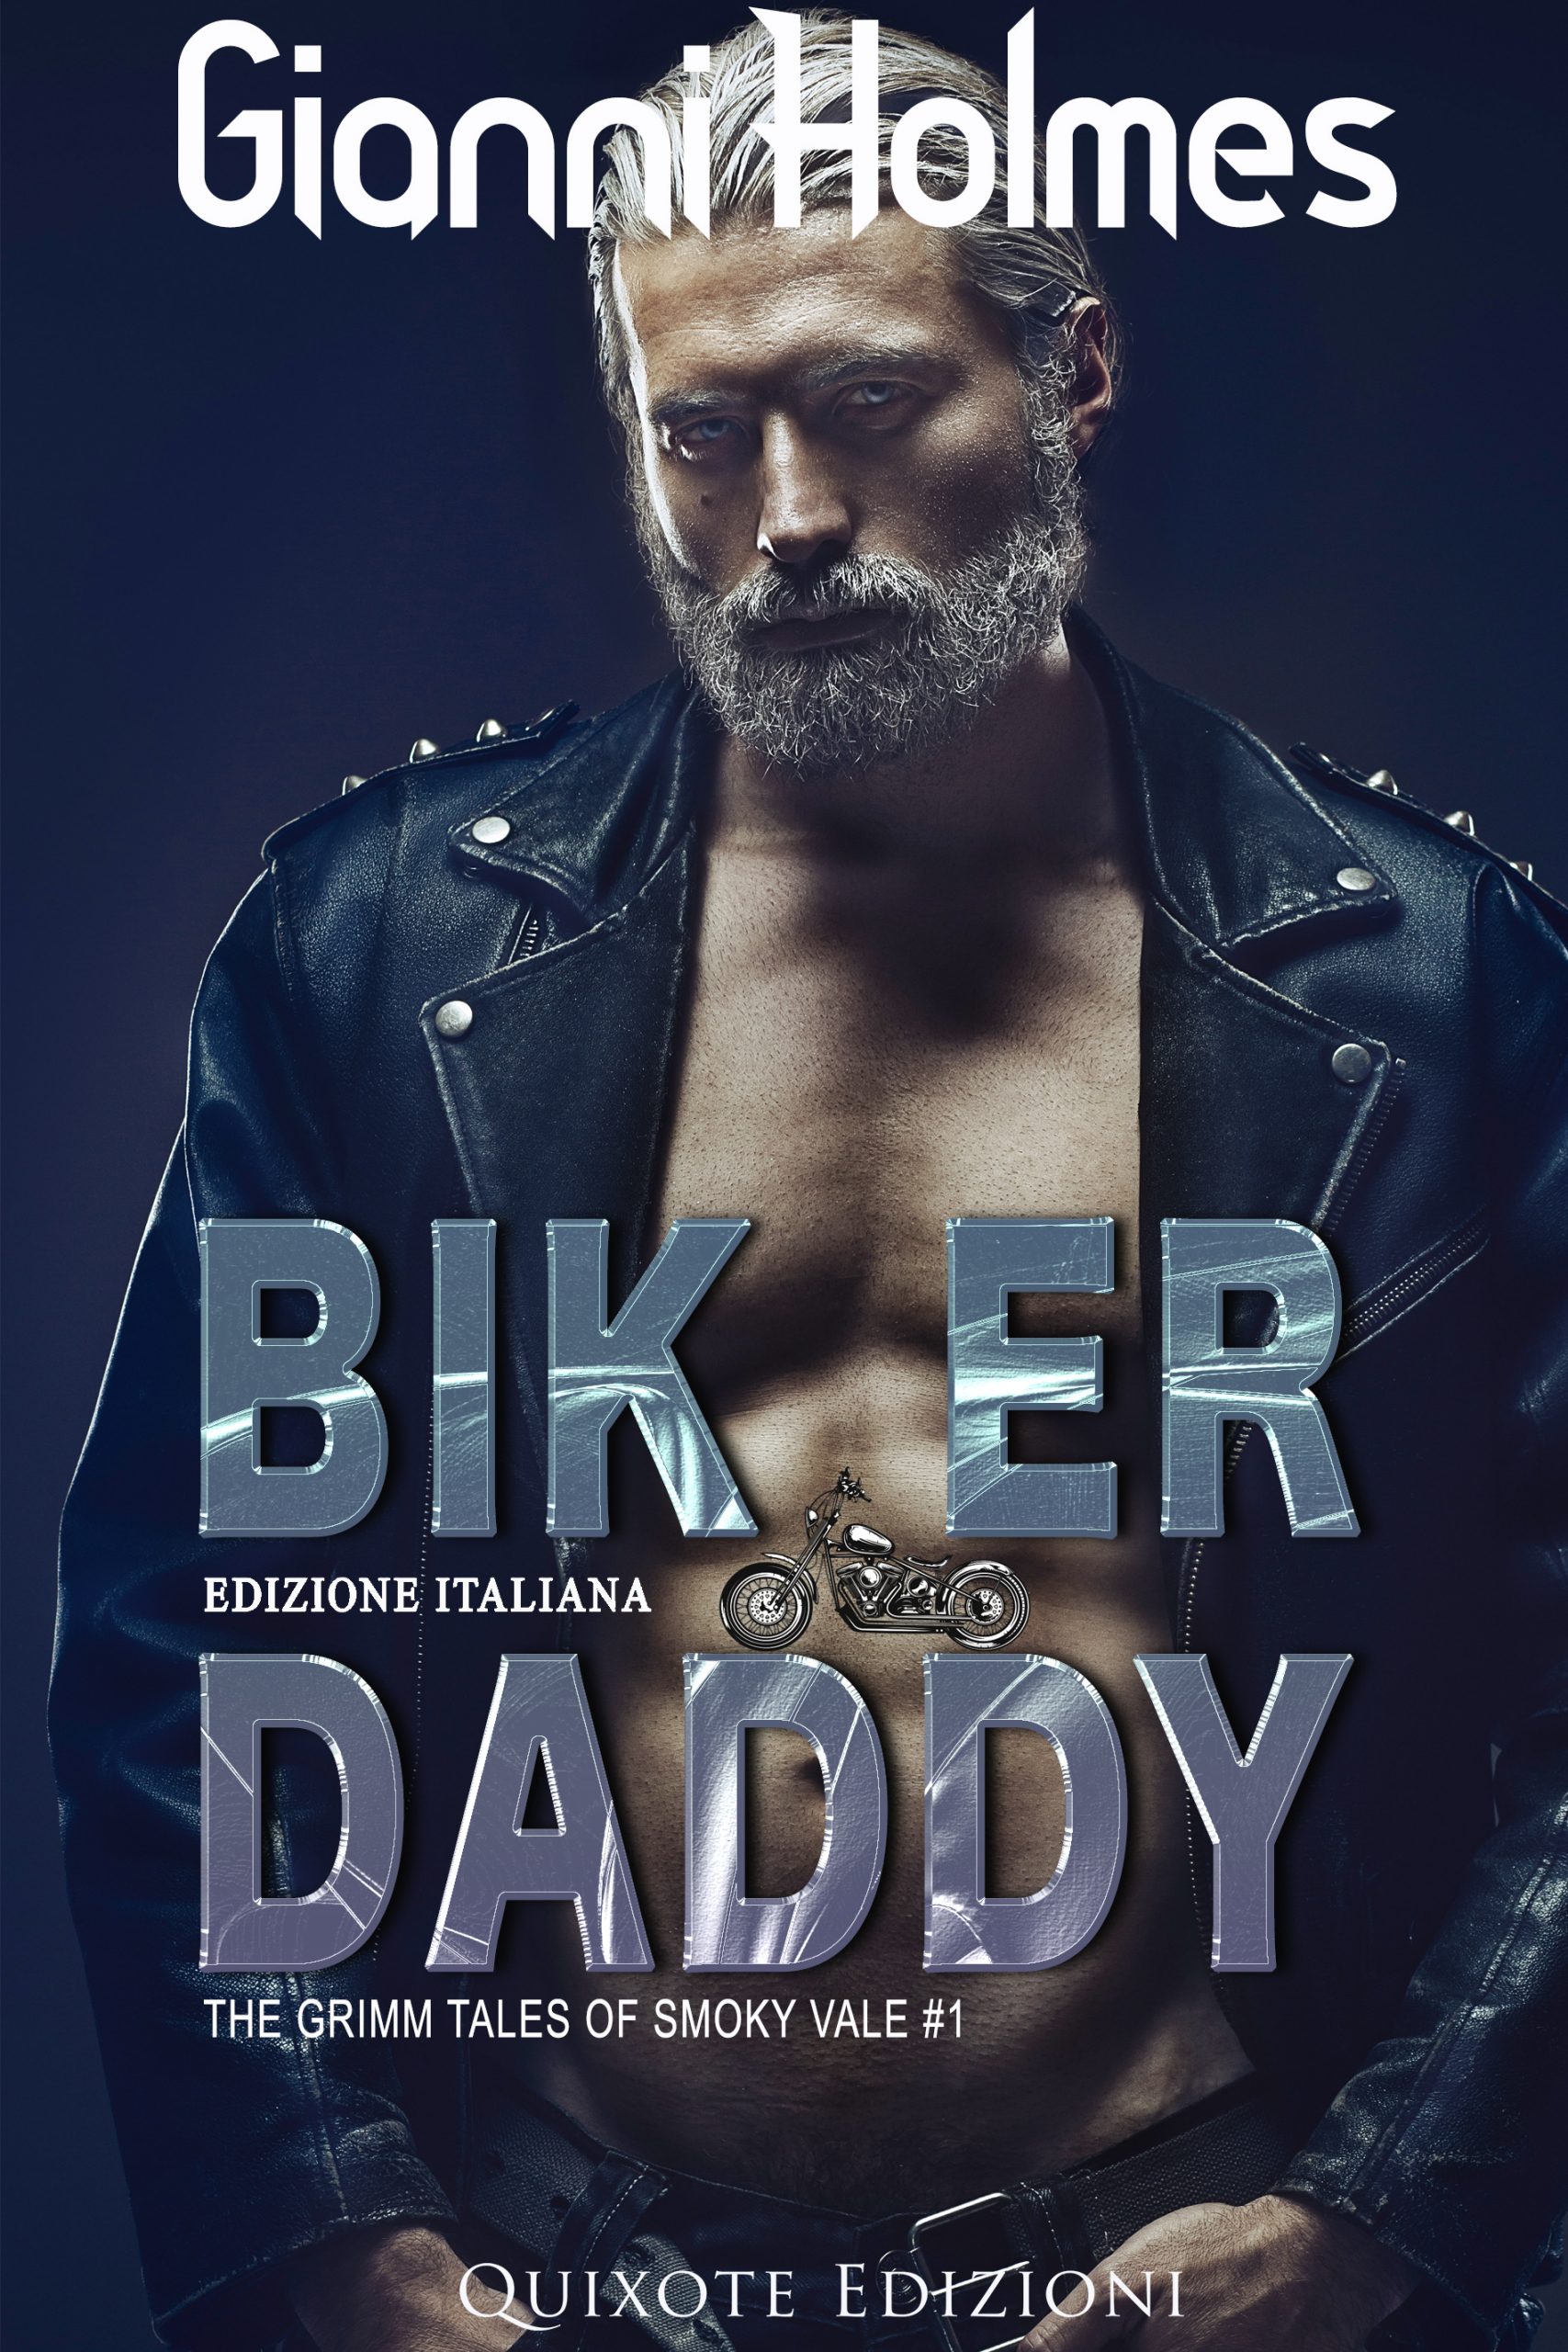 Segnalazione di uscita “Biker Daddy” di Gianni Holmes